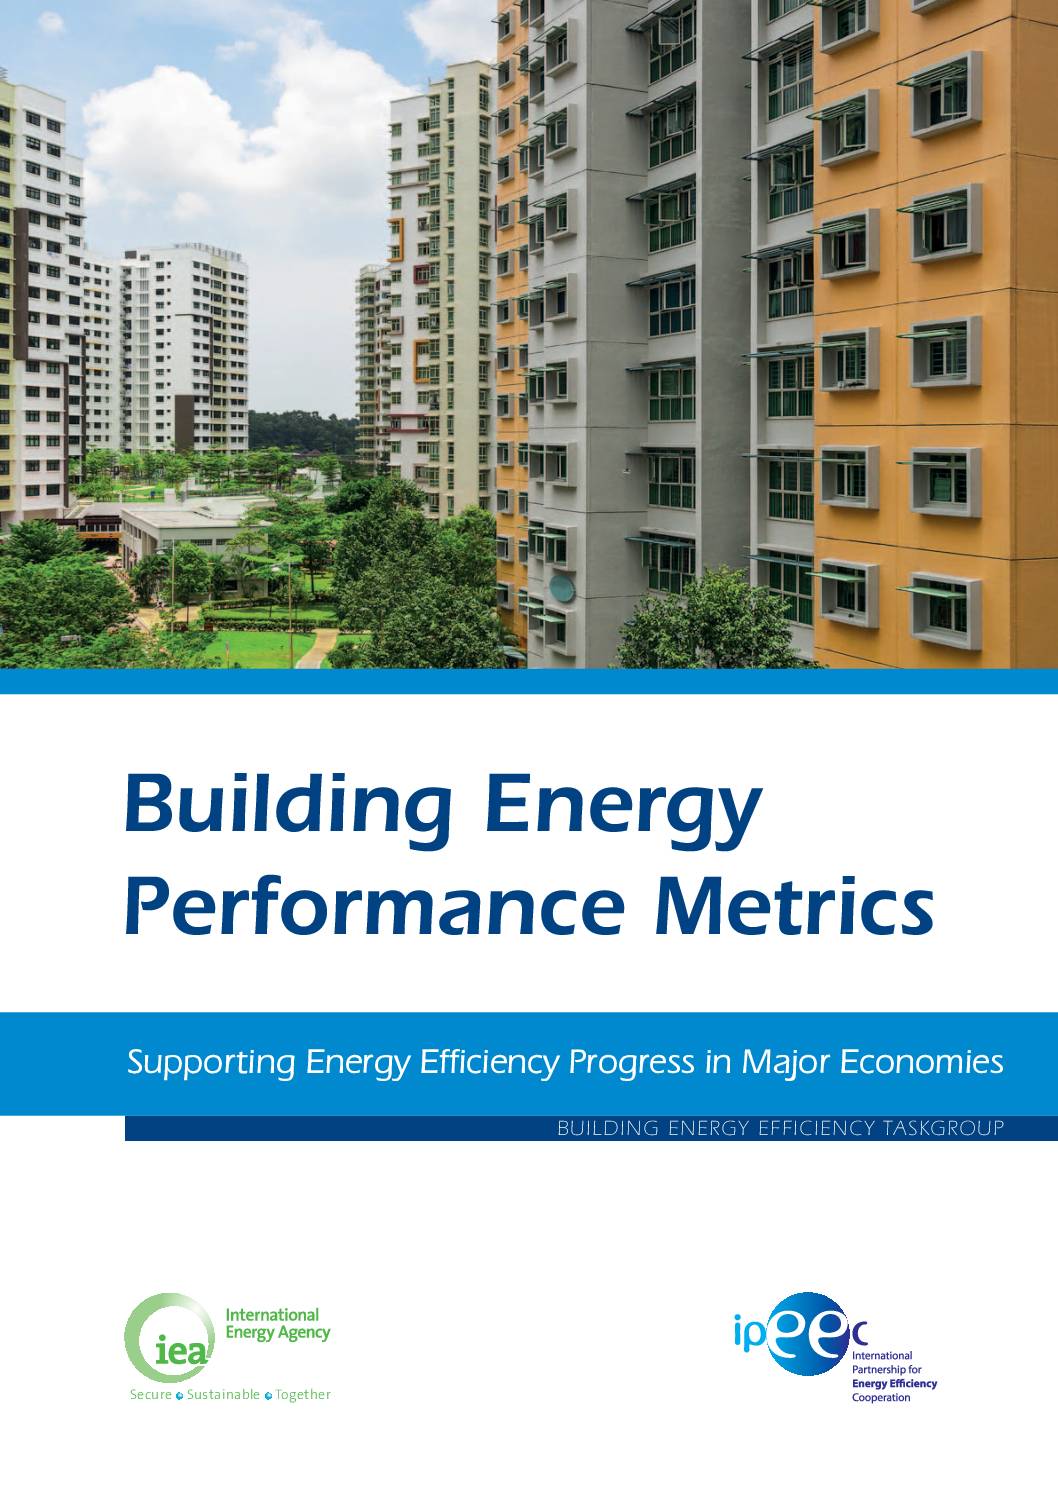 Building Energy Performance Metrics: Supporting Energy Efficiency Progress in Major Economies